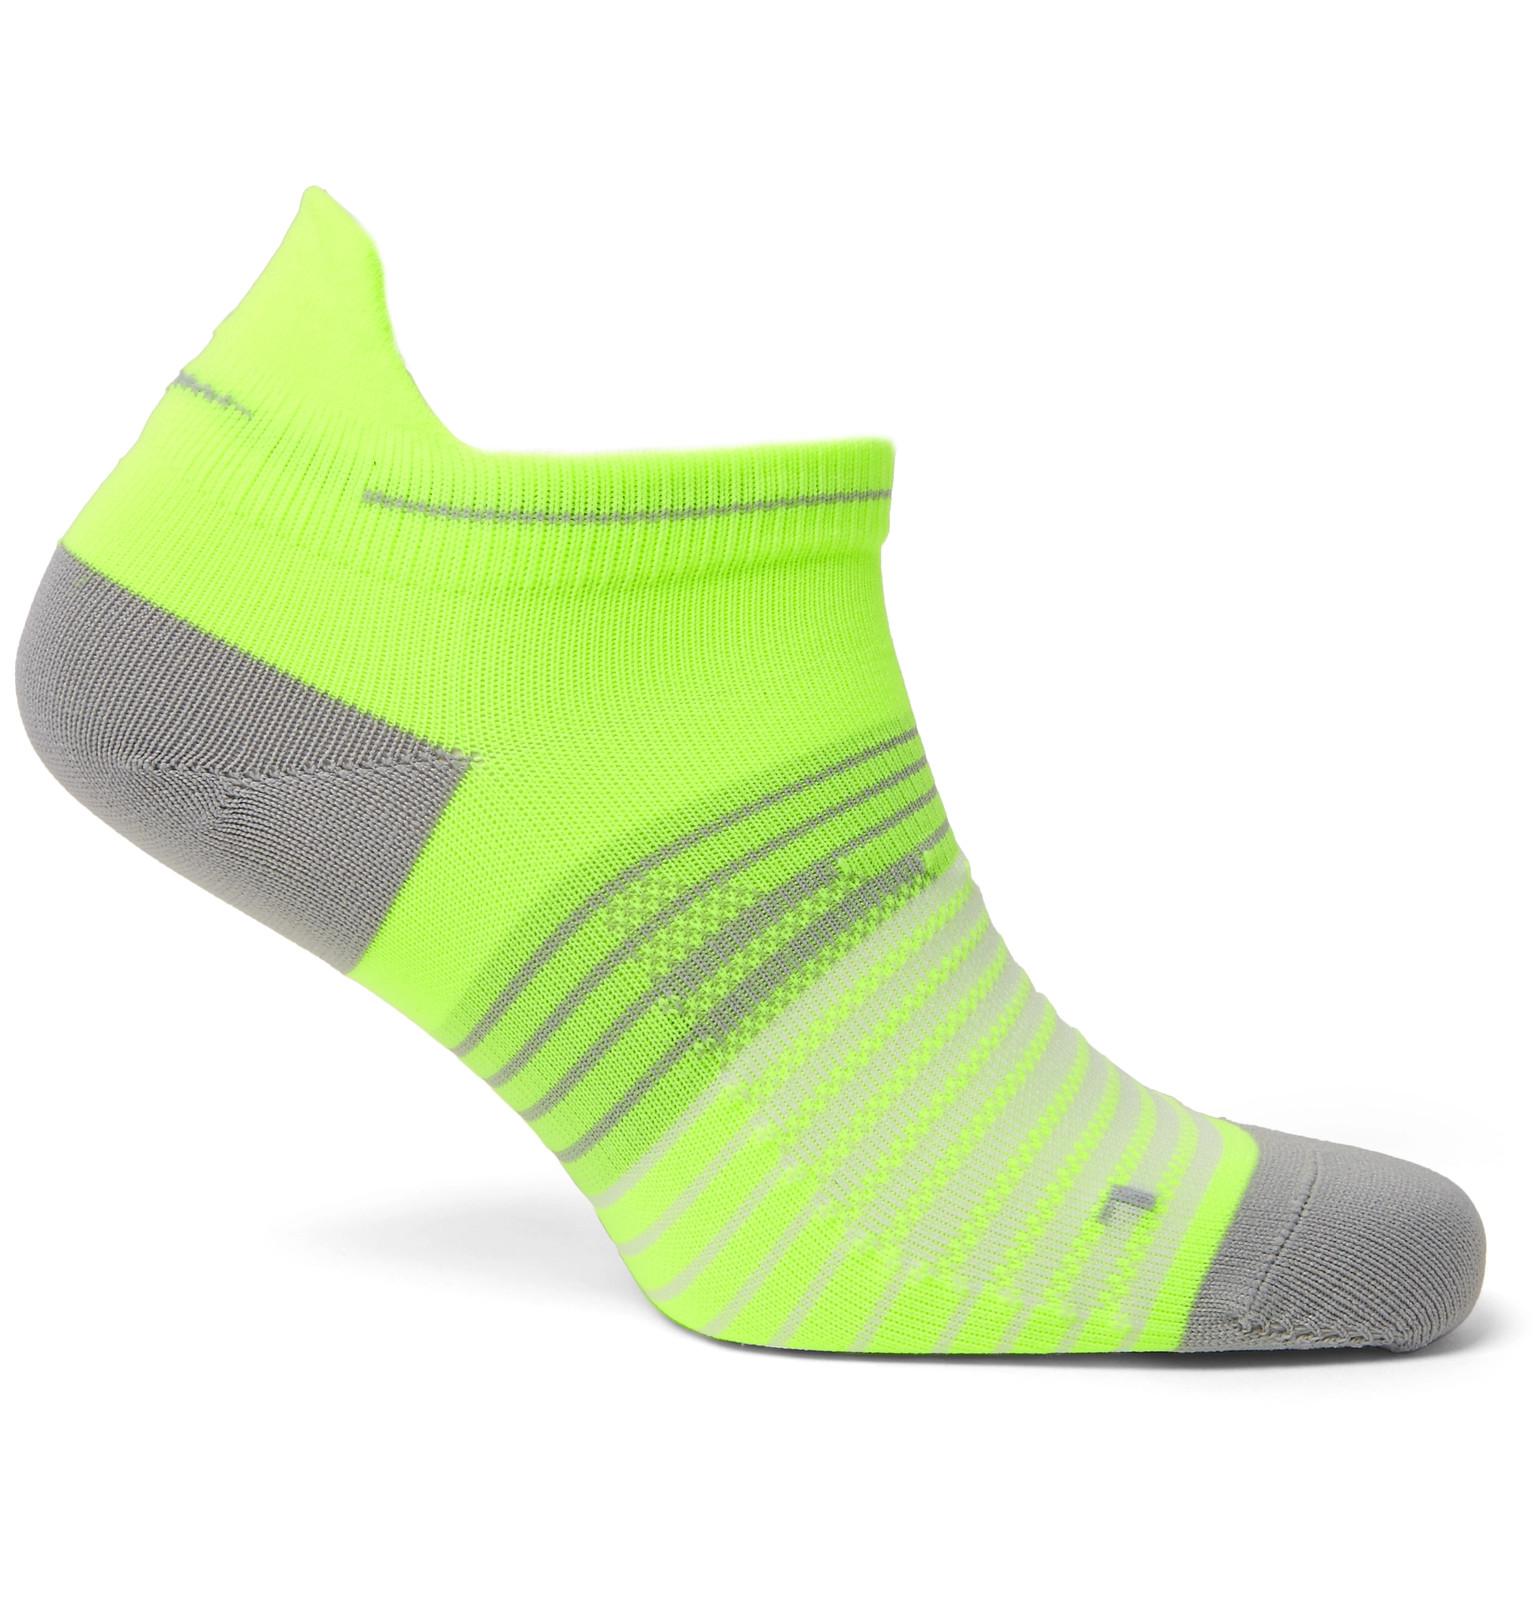 Nike Performance Dri-fit No-show Socks in Green for Men - Lyst